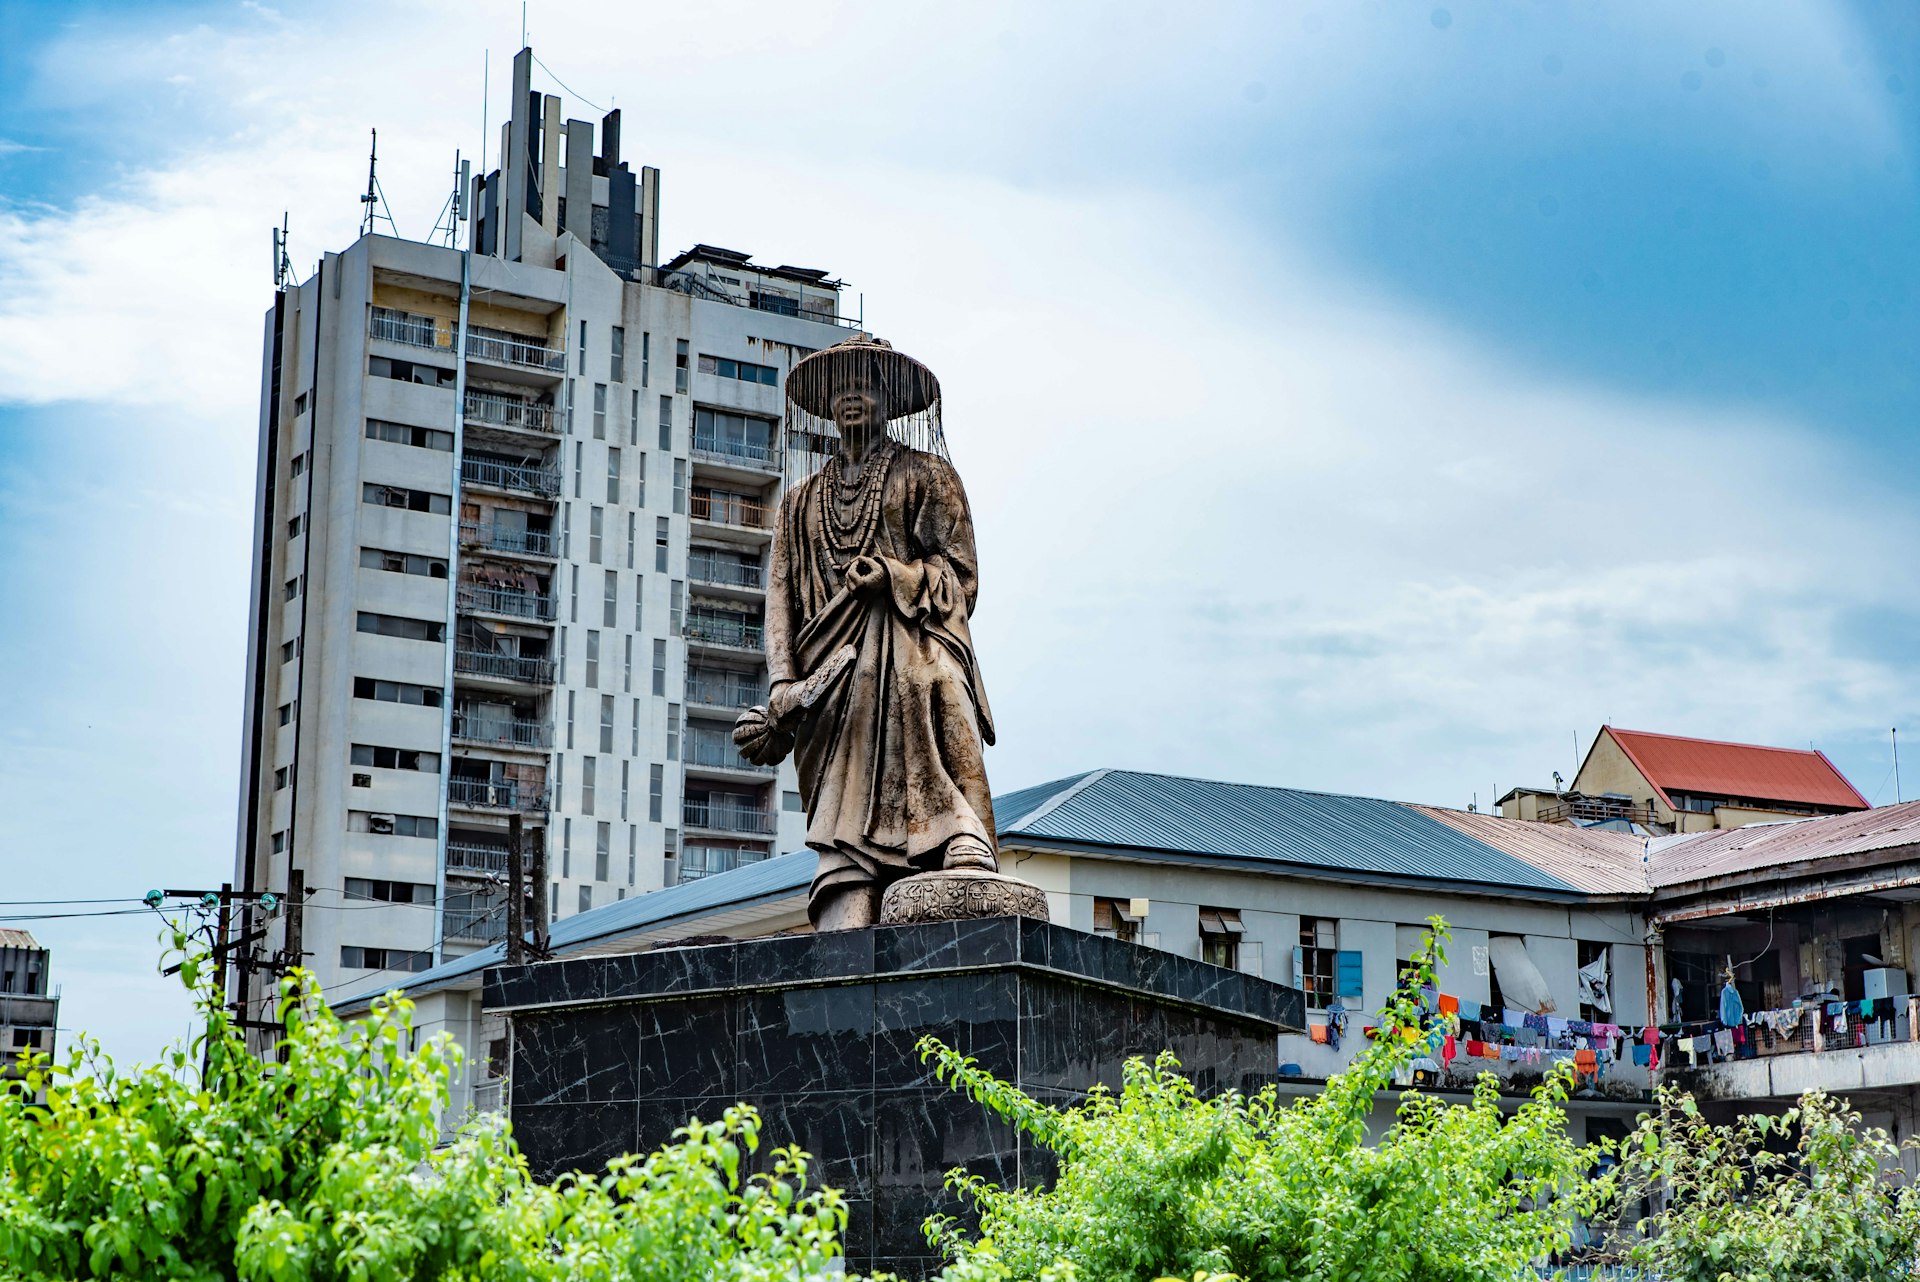 A statue of the first Crown King of Lagos, King Ado, in Tafawa Balewa Square, Lagos, Nigeria